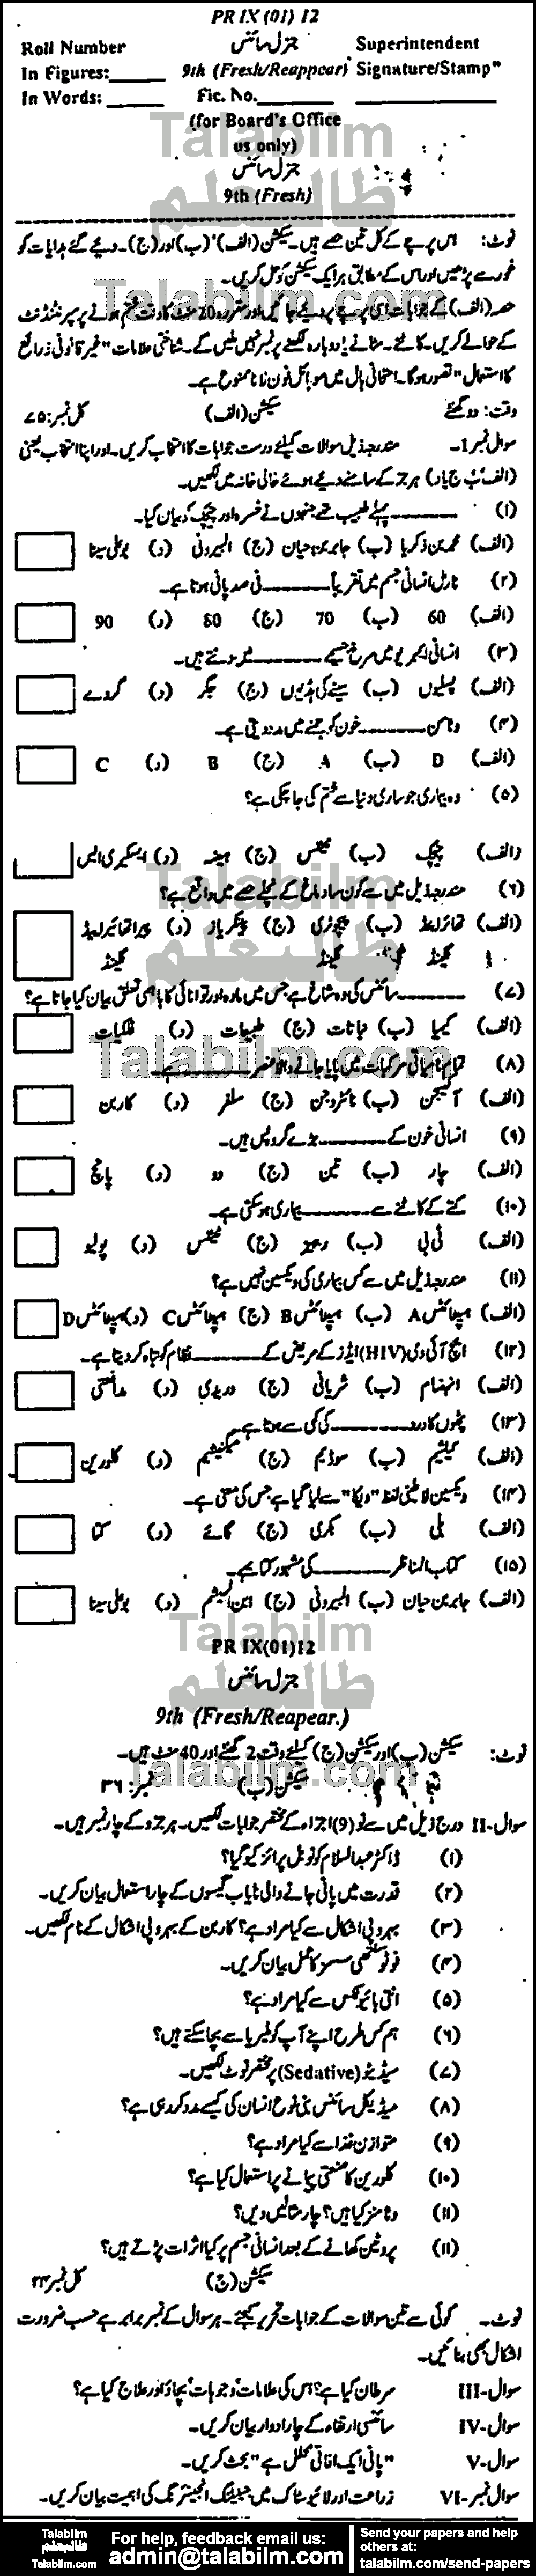 General Science 0 past paper for Urdu Medium 2012 Group-I